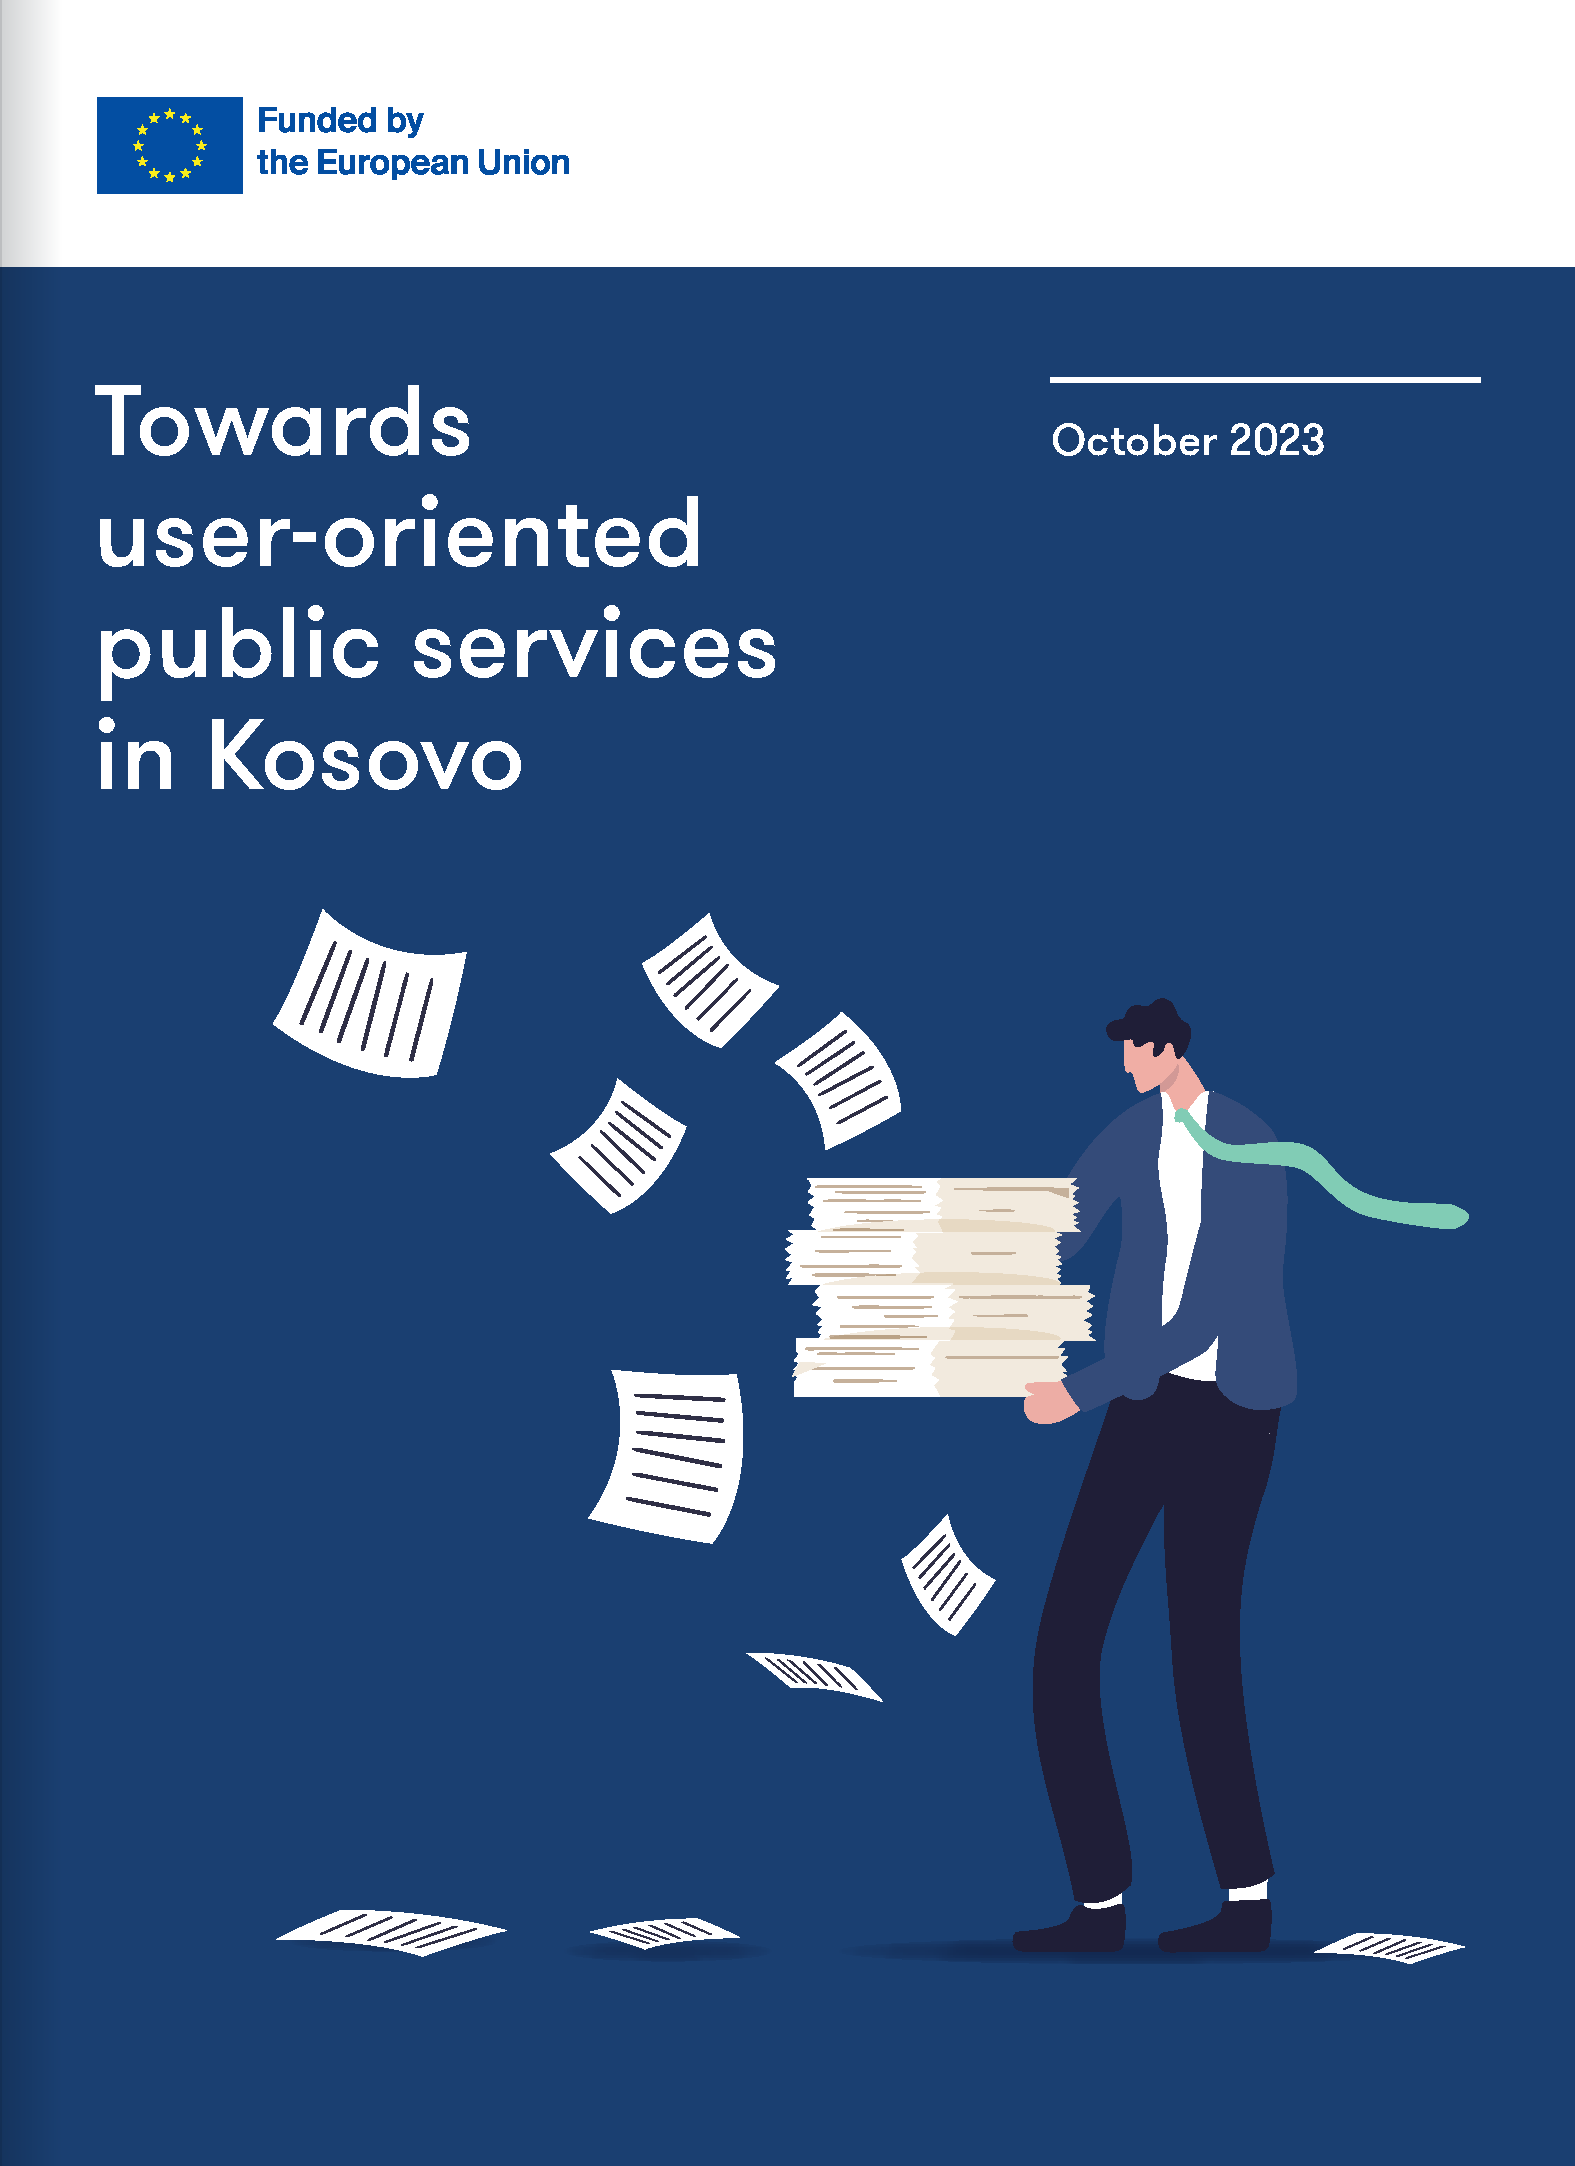 Towards user-oriented public services in Kosovo